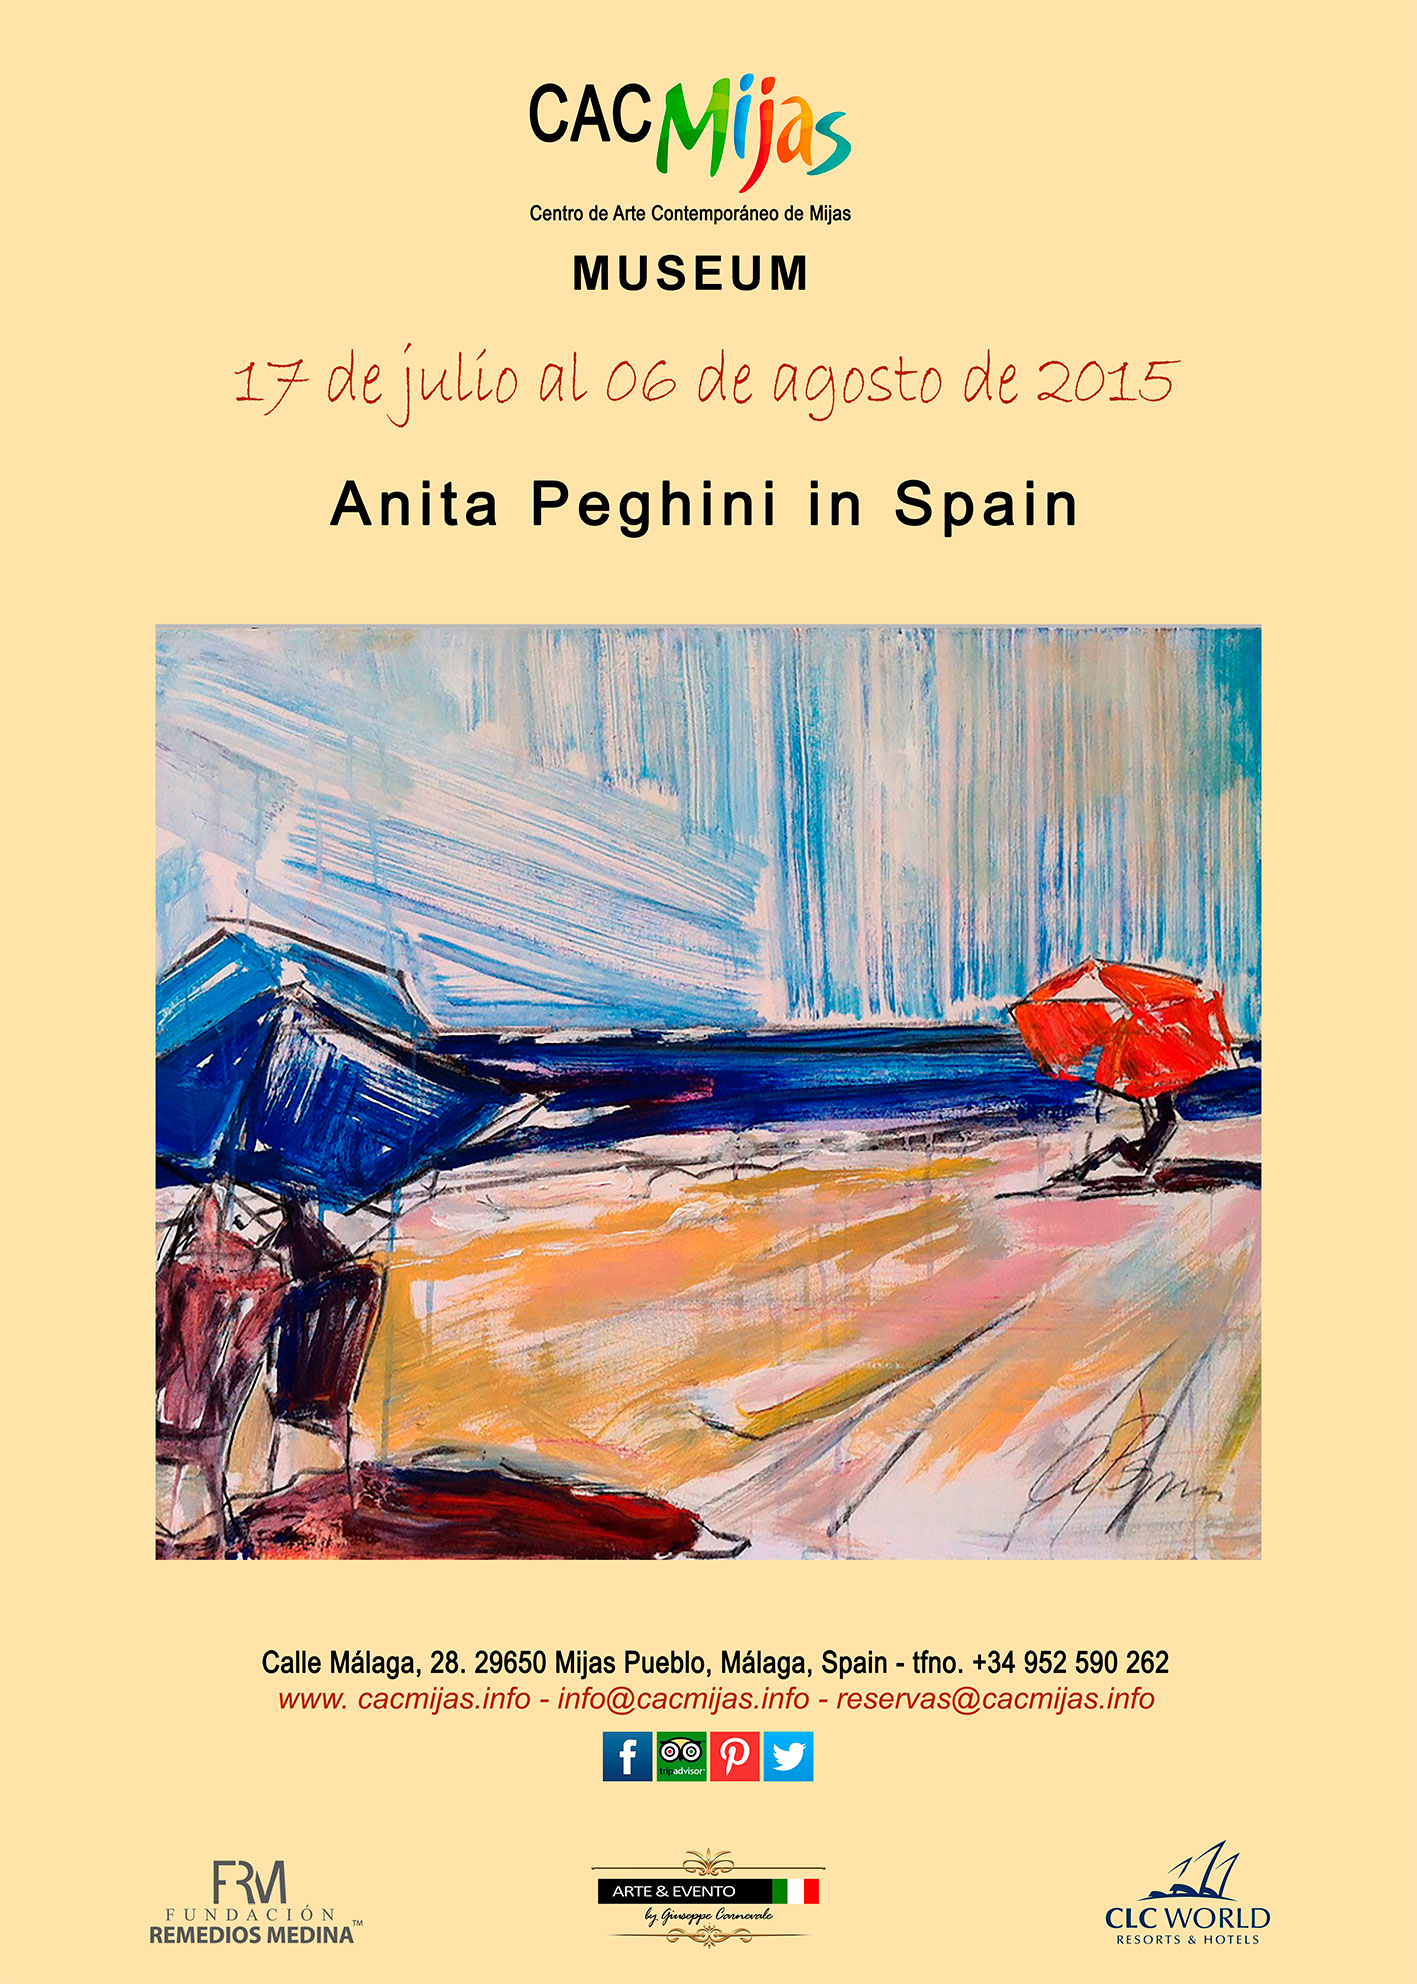 ANITA PEGHINI IN SPAIN